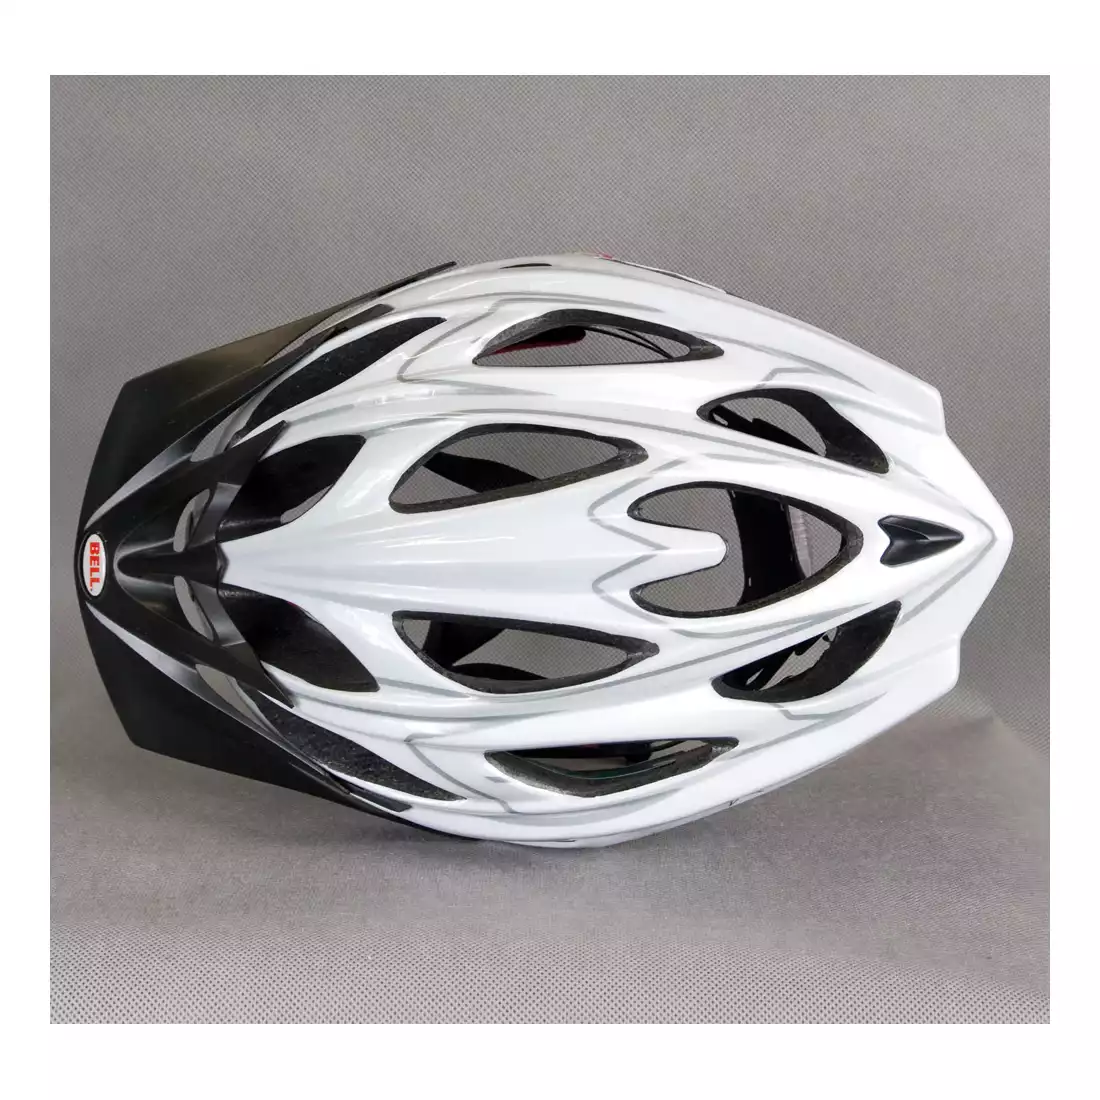 BELL - kask rowerowy DELIRIUM srebrno-biały